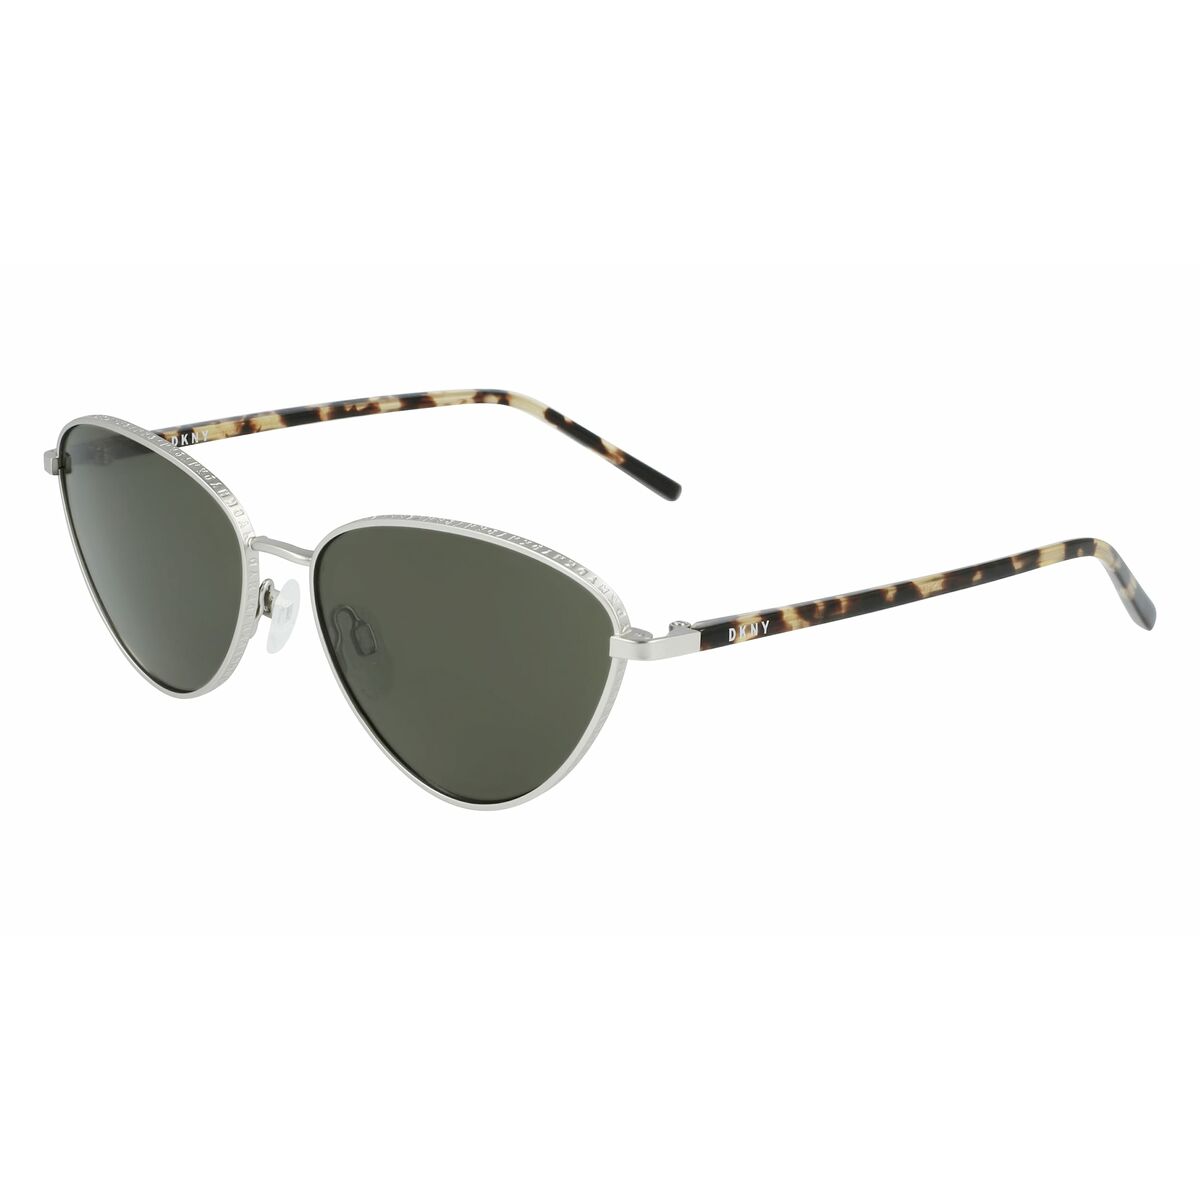 Ladies'Sunglasses DKNY DK303S-035 ø 57 mm